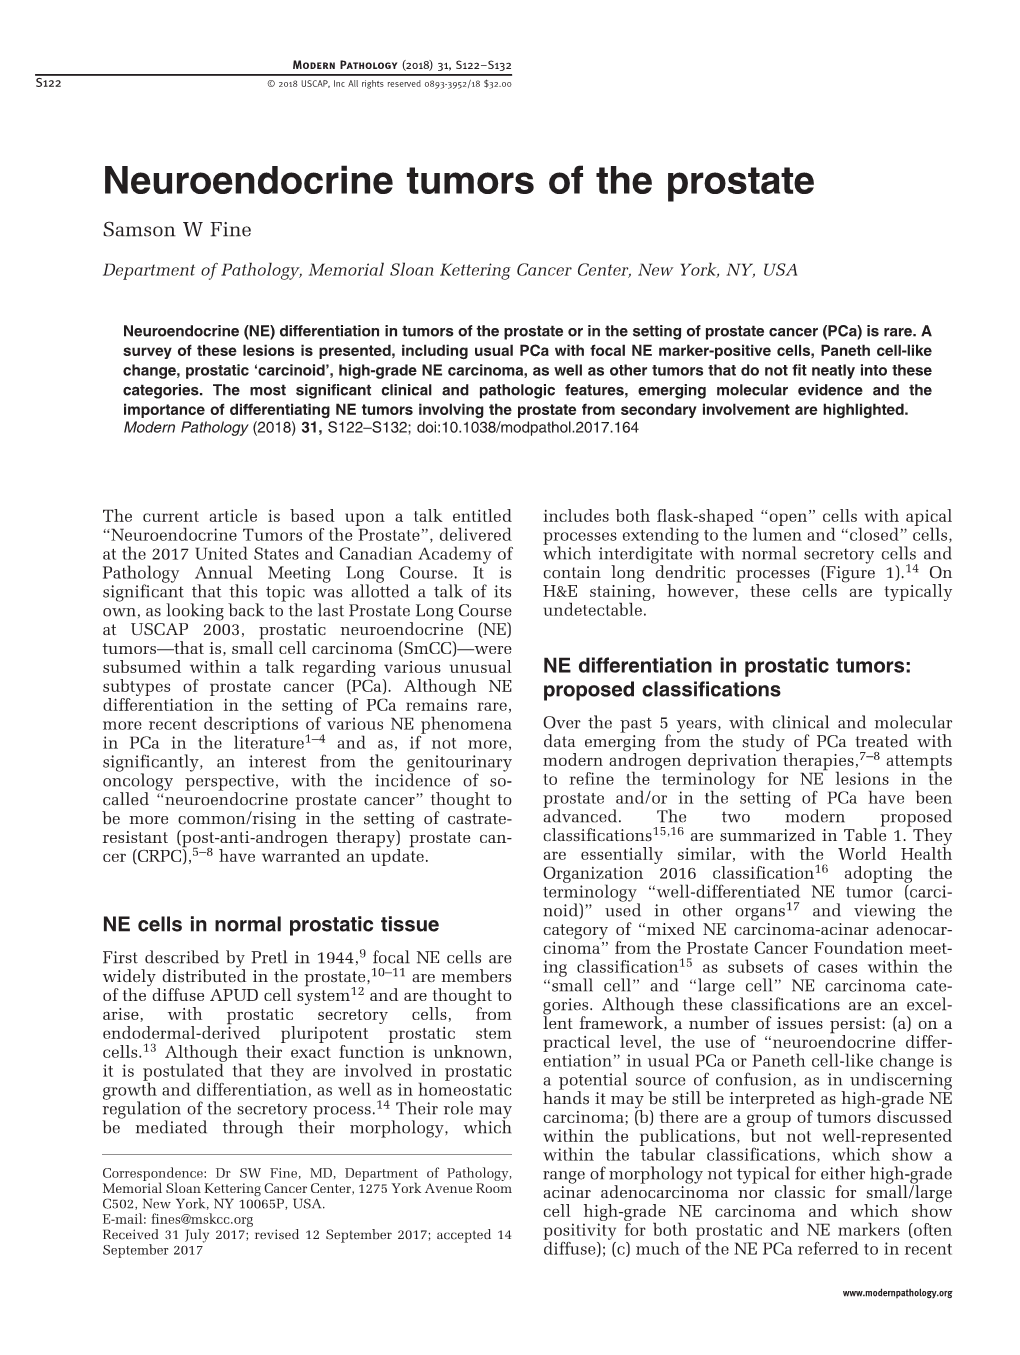 Neuroendocrine Tumors of the Prostate Samson W Fine